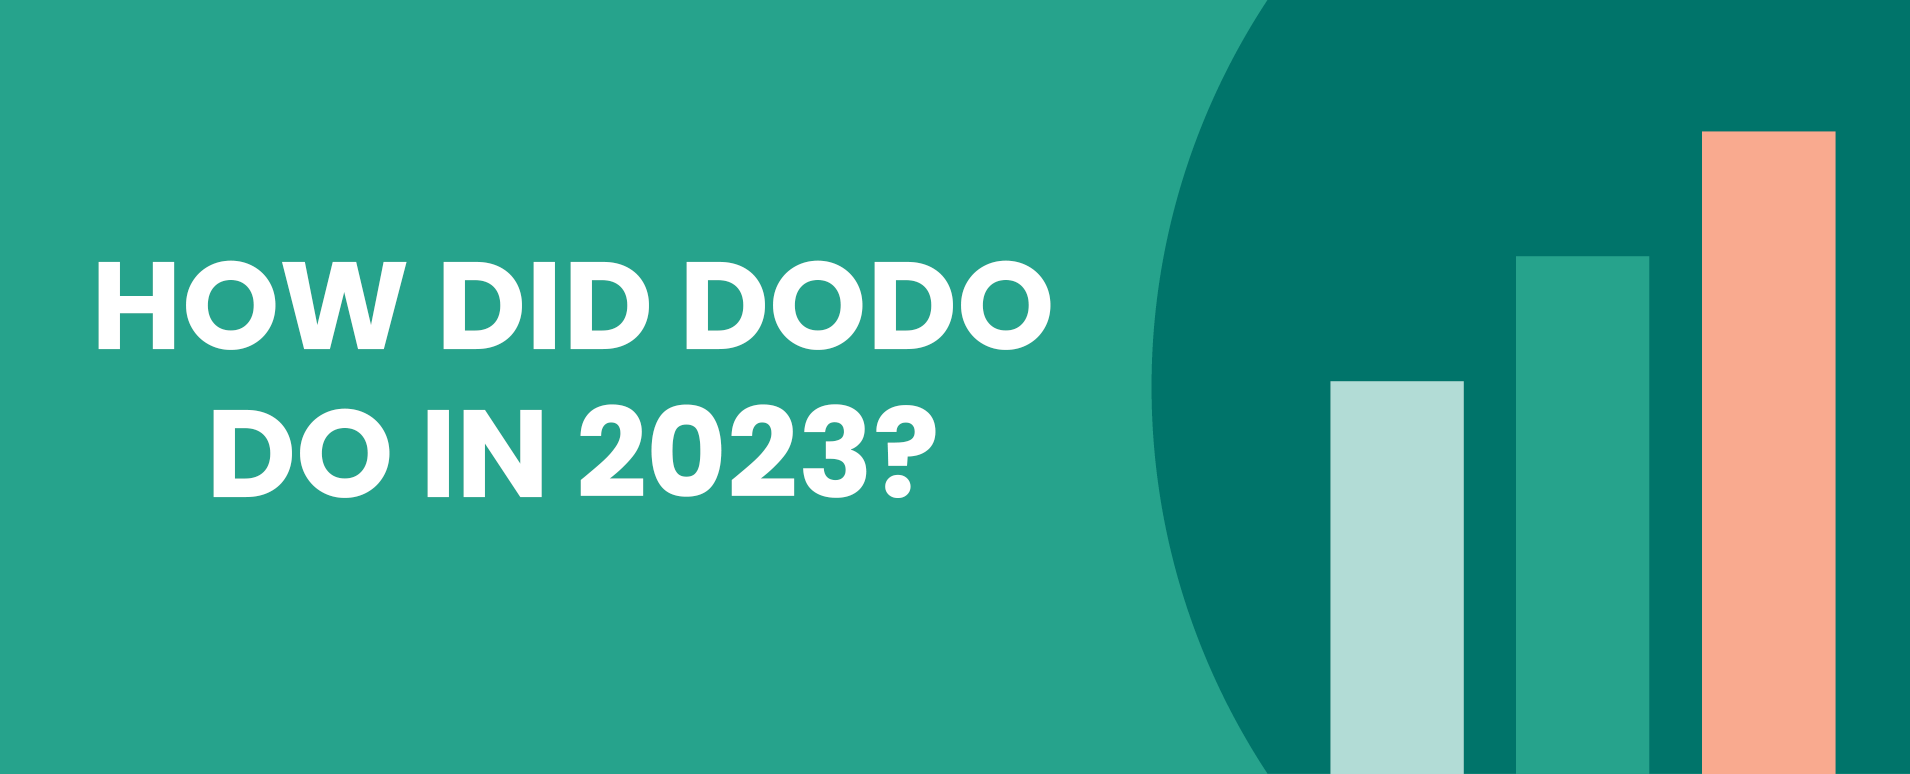 DODO business results 2023